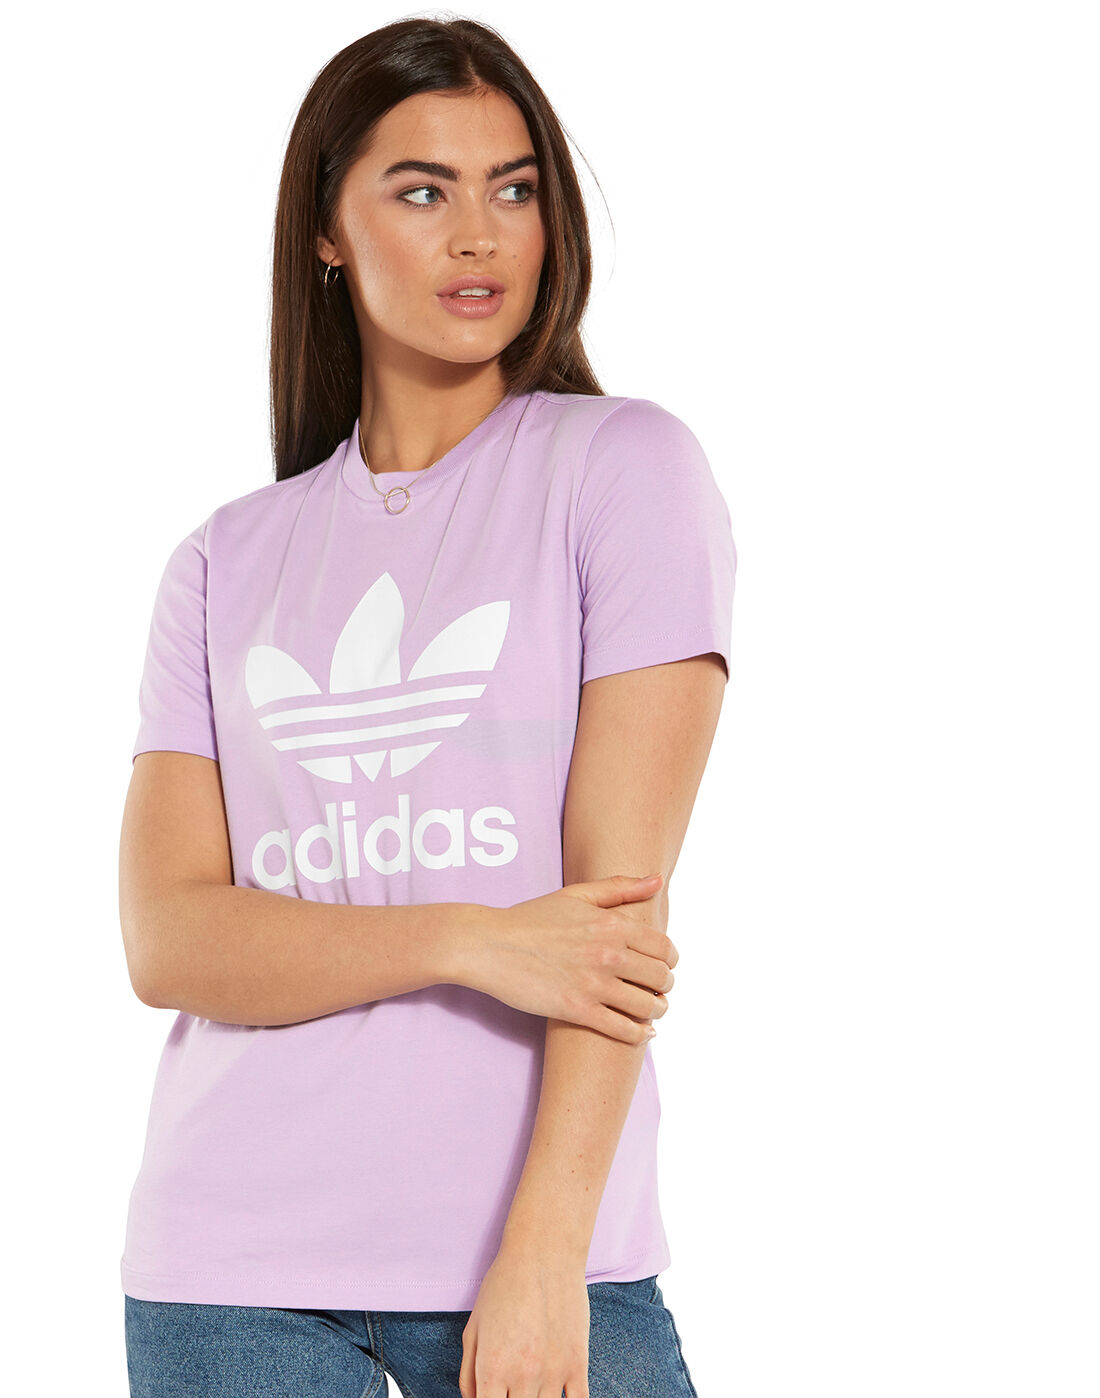 purple adidas trefoil shirt